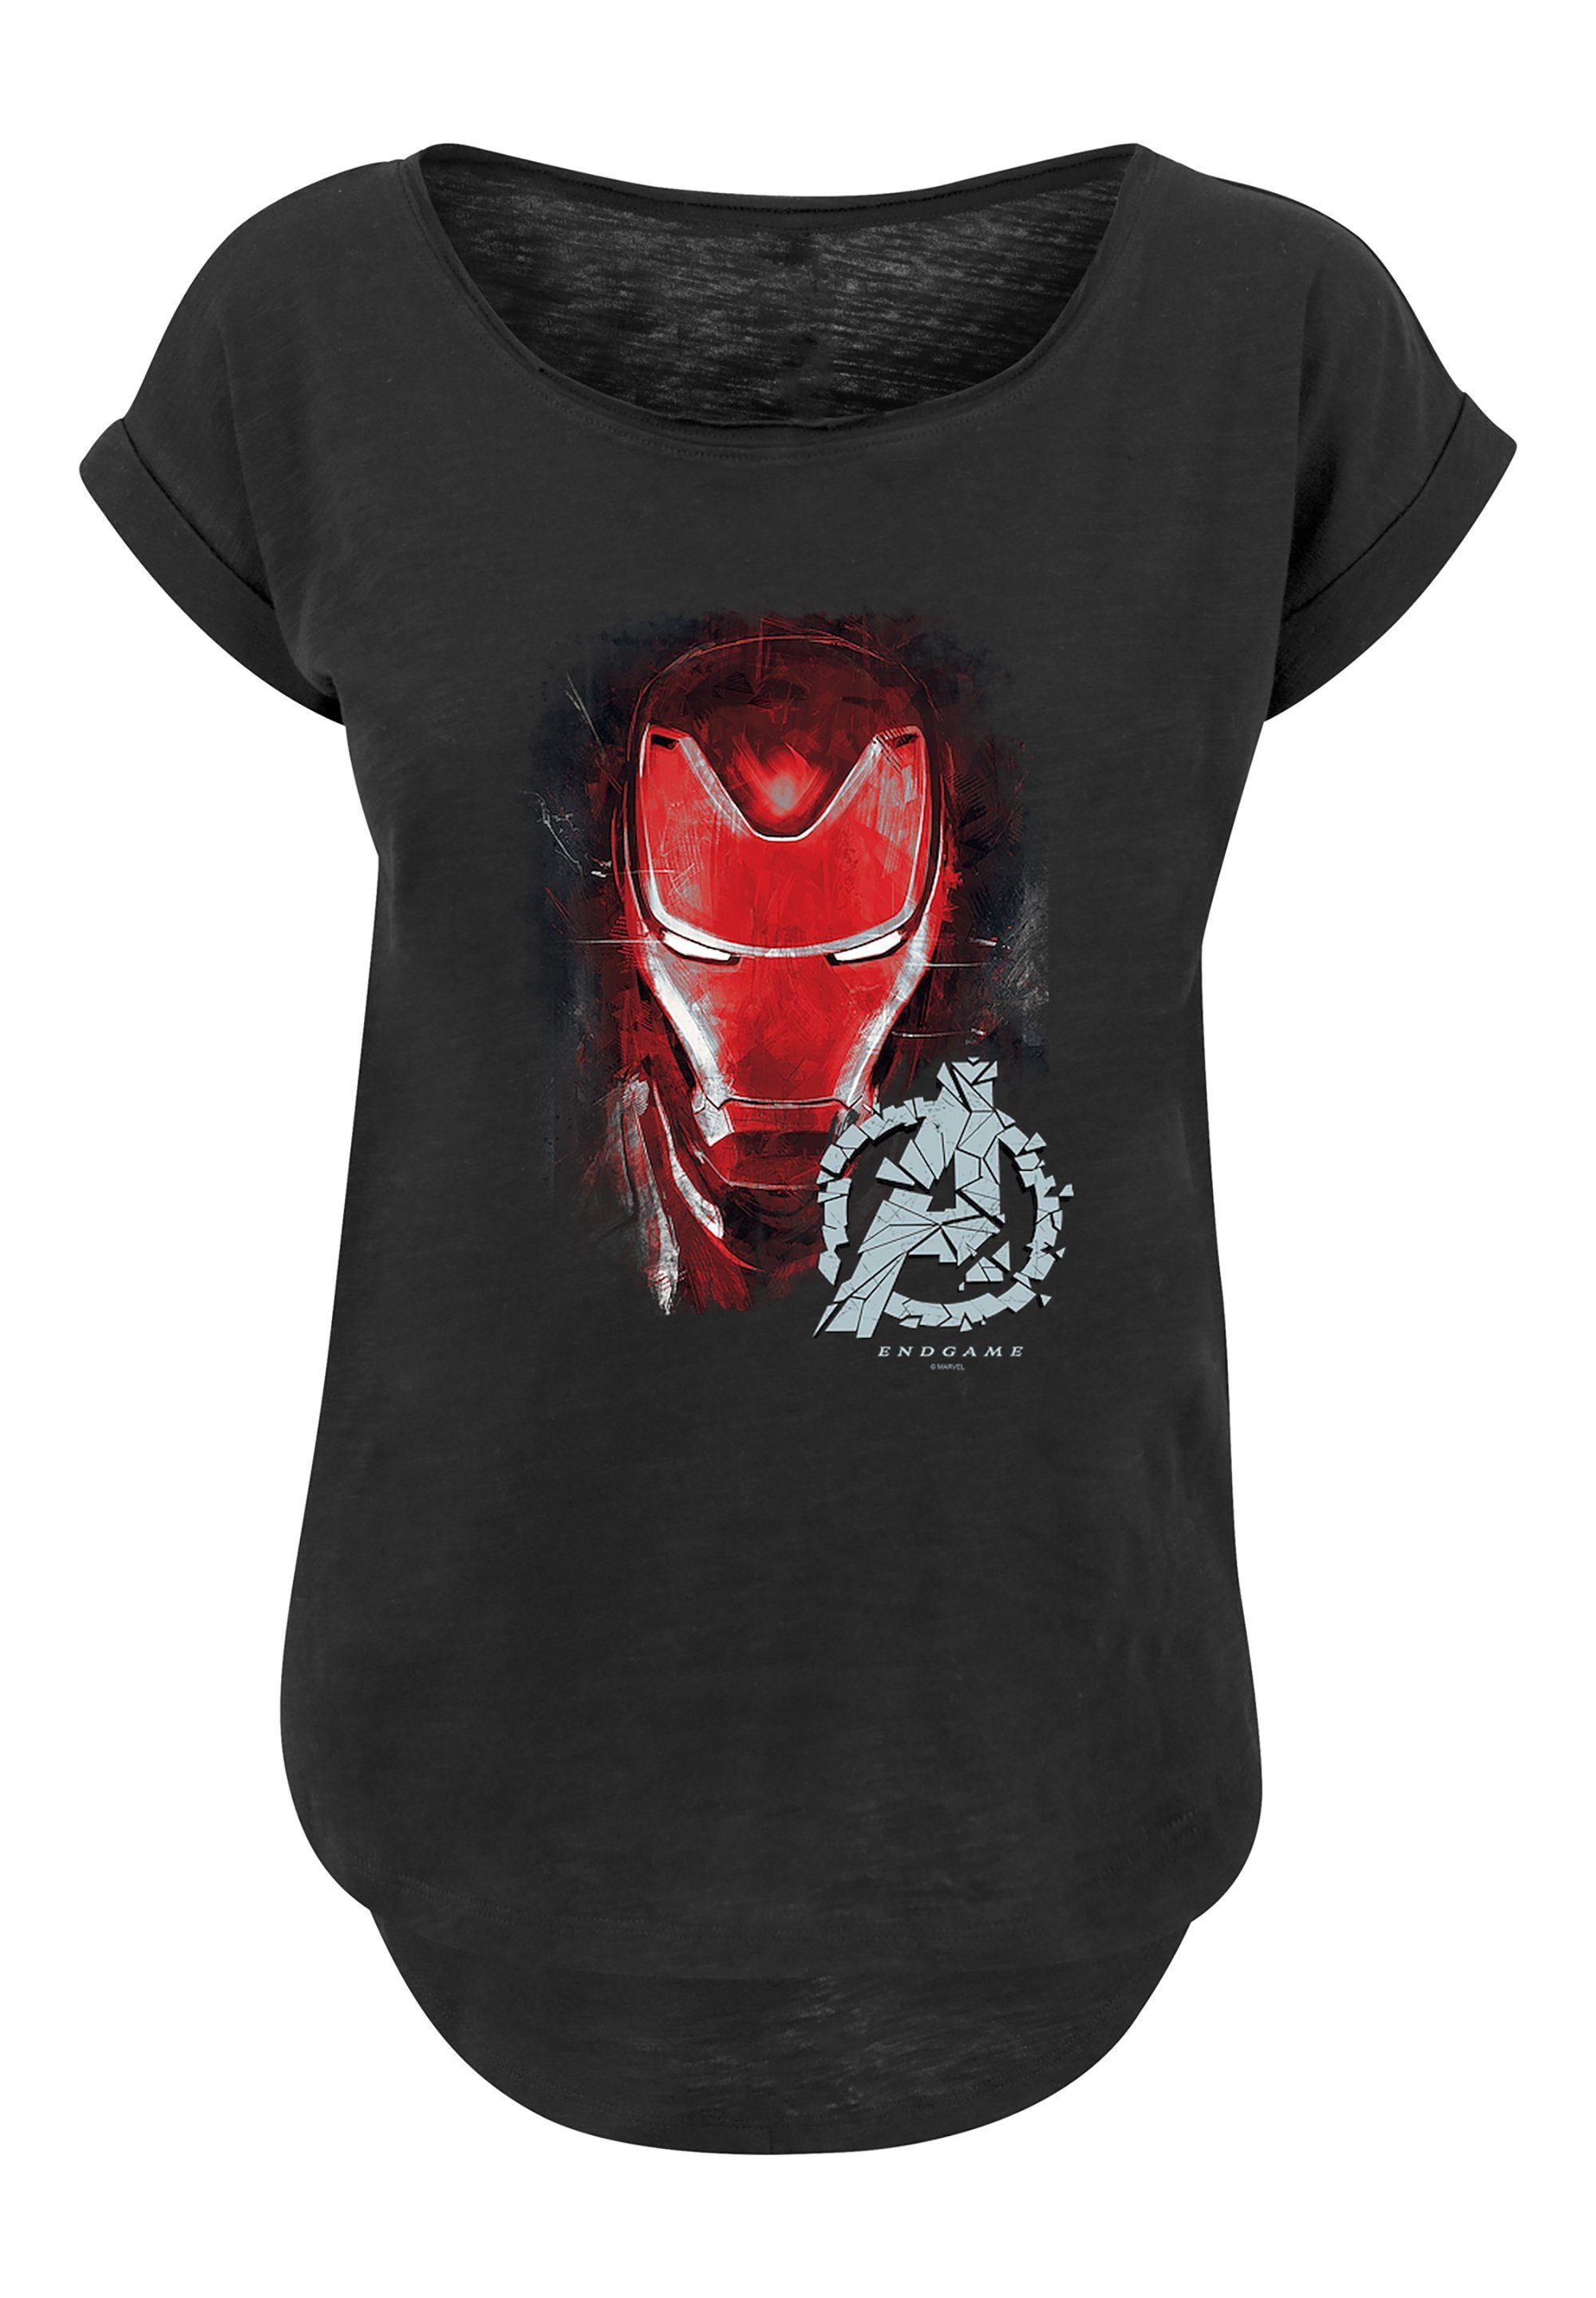 F4NT4STIC T-Shirt Marvel Avengers Merch Iron Damen,Premium Sehr Tragekomfort Print, Endgame Man hohem weicher mit Baumwollstoff ,Lang,Longshirt,Logo